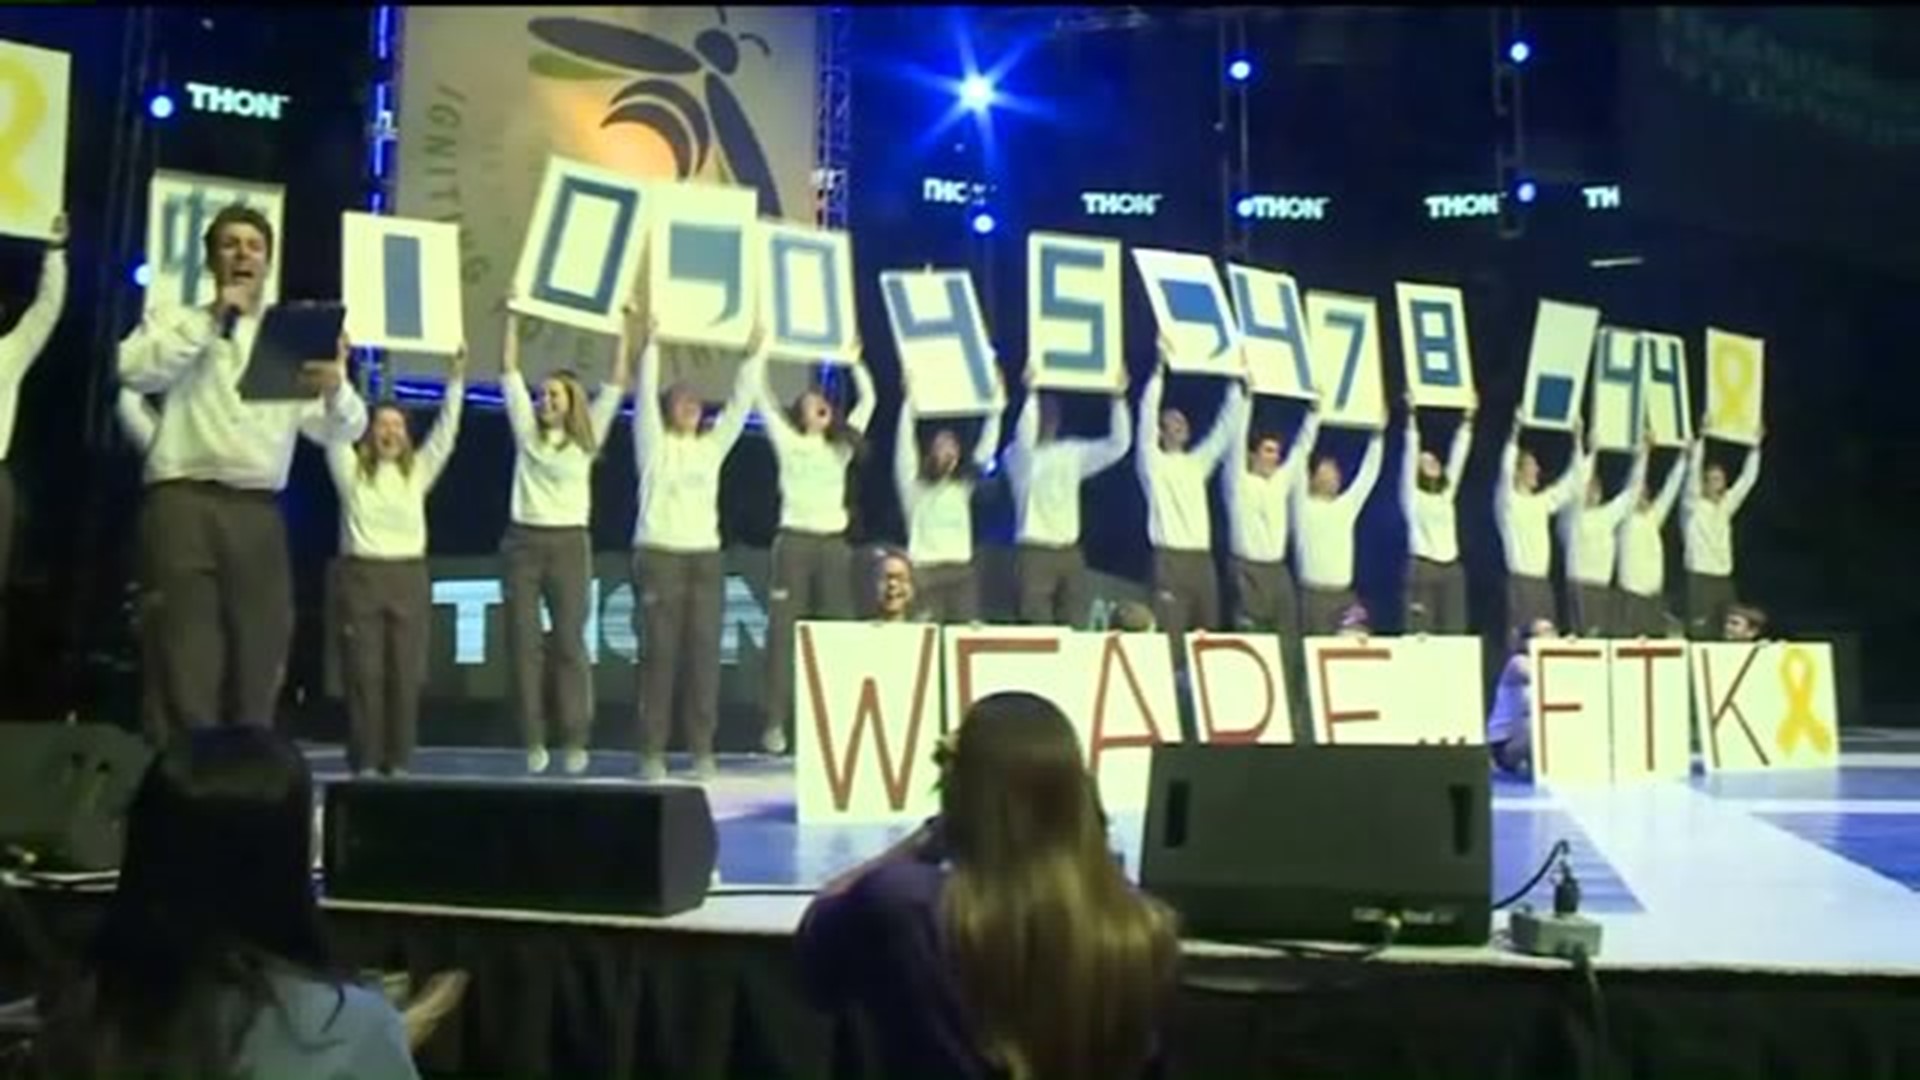 THON 2017 Raises Over $10 Million